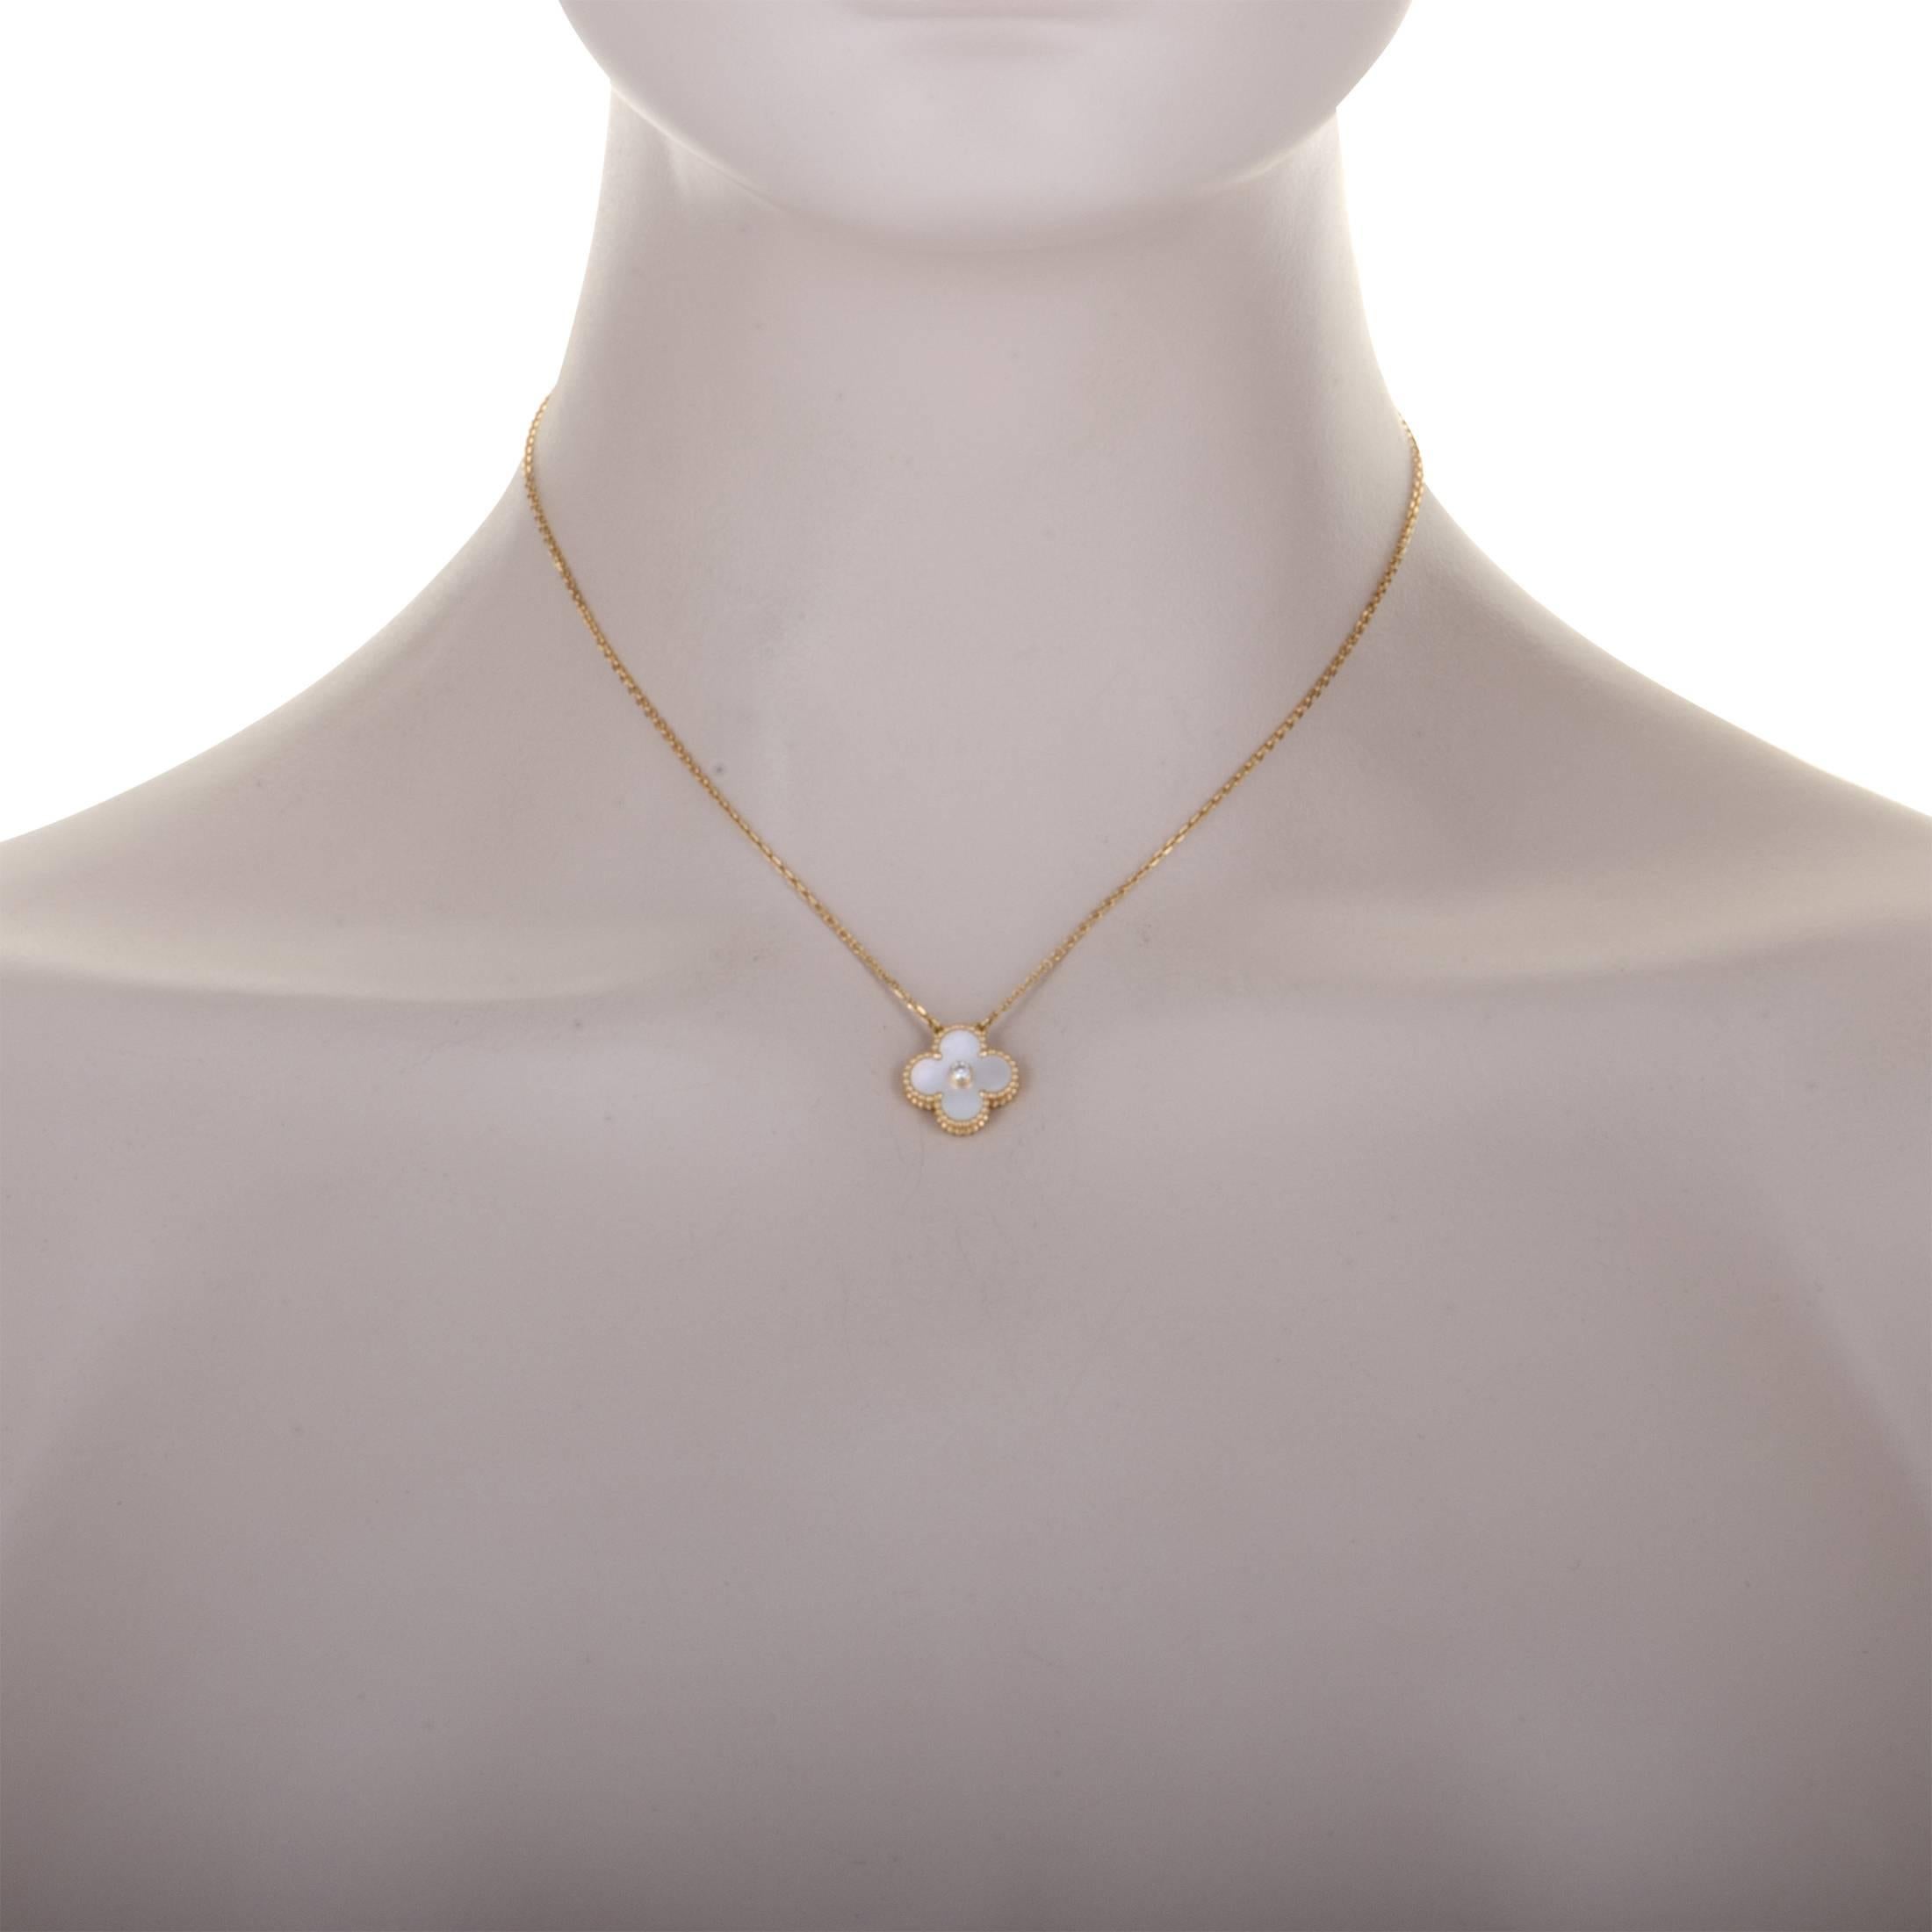 Van Cleef & Arpels Estate Vintage Alhambra 18K Rose Gold 1 Diamond, Mother of Pearl Pendant Necklace

Chain Length 16